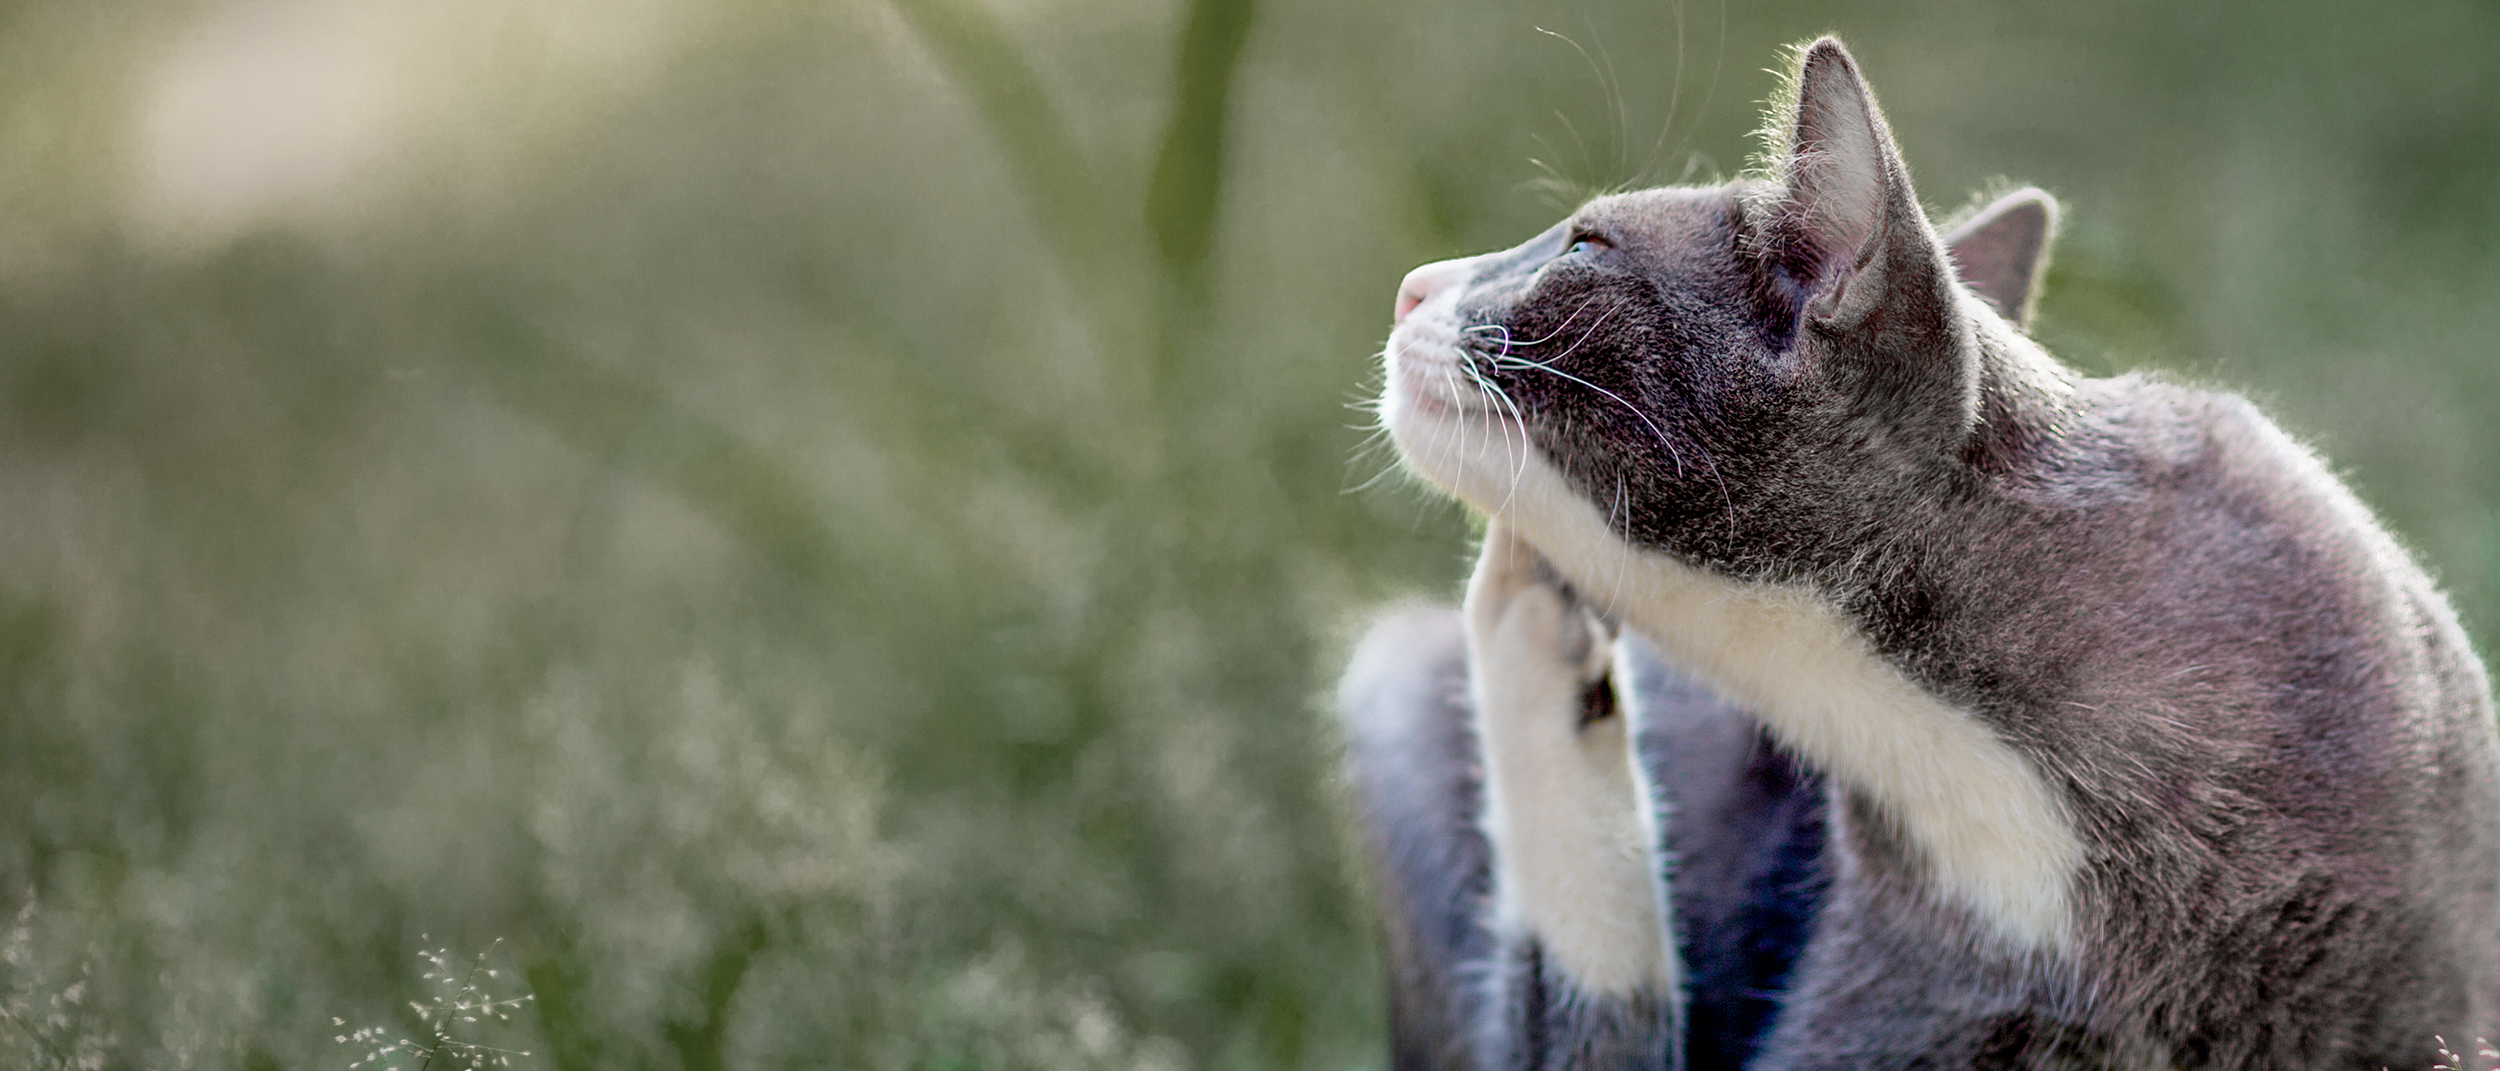 Kucing dewasa yang sedang menggaruk, kenali alergi dan penyakit kulit pada kucing